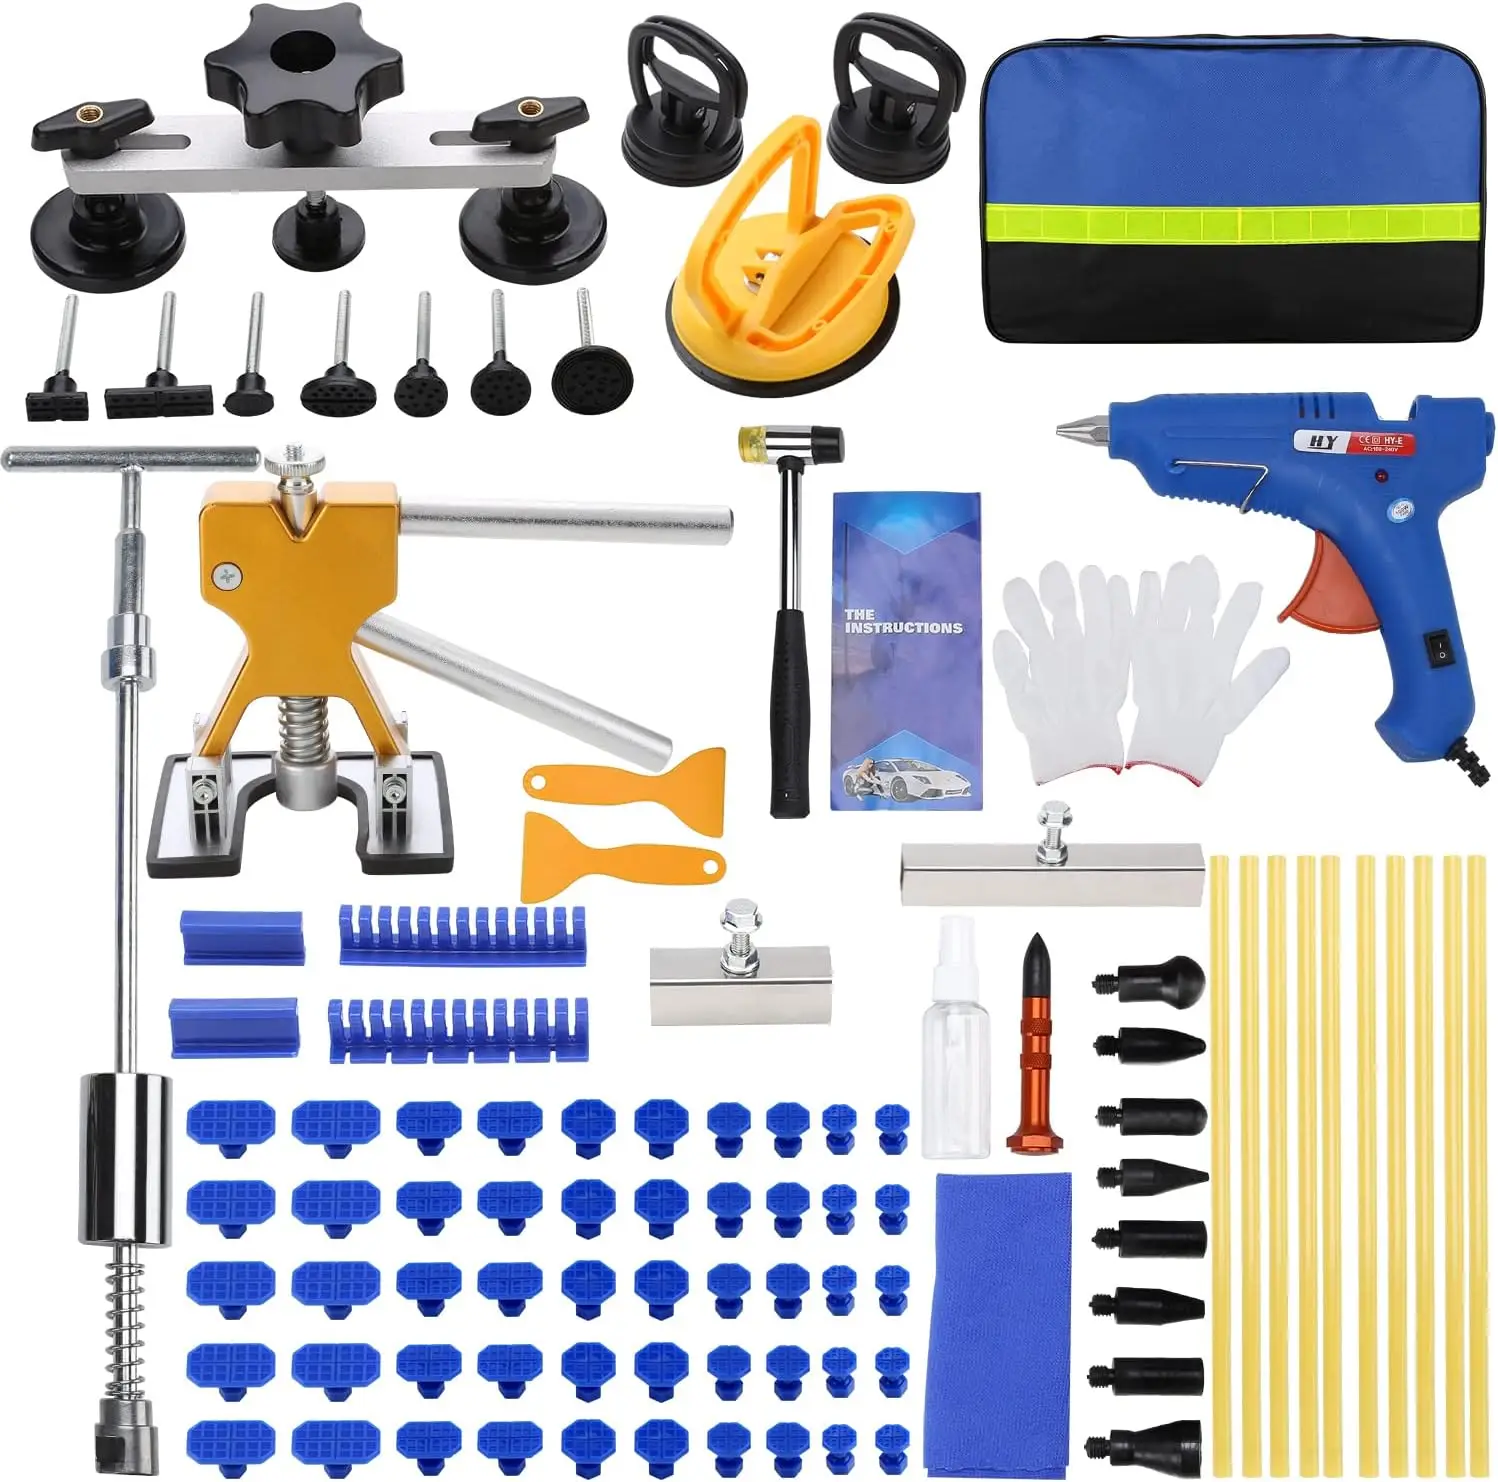 

Auto Body Dent Repair Kit, Paintless Dent Repair Kit with Golden Lifter, Slide Hammer T-bar Dent Puller, Bridge Puller, Suction